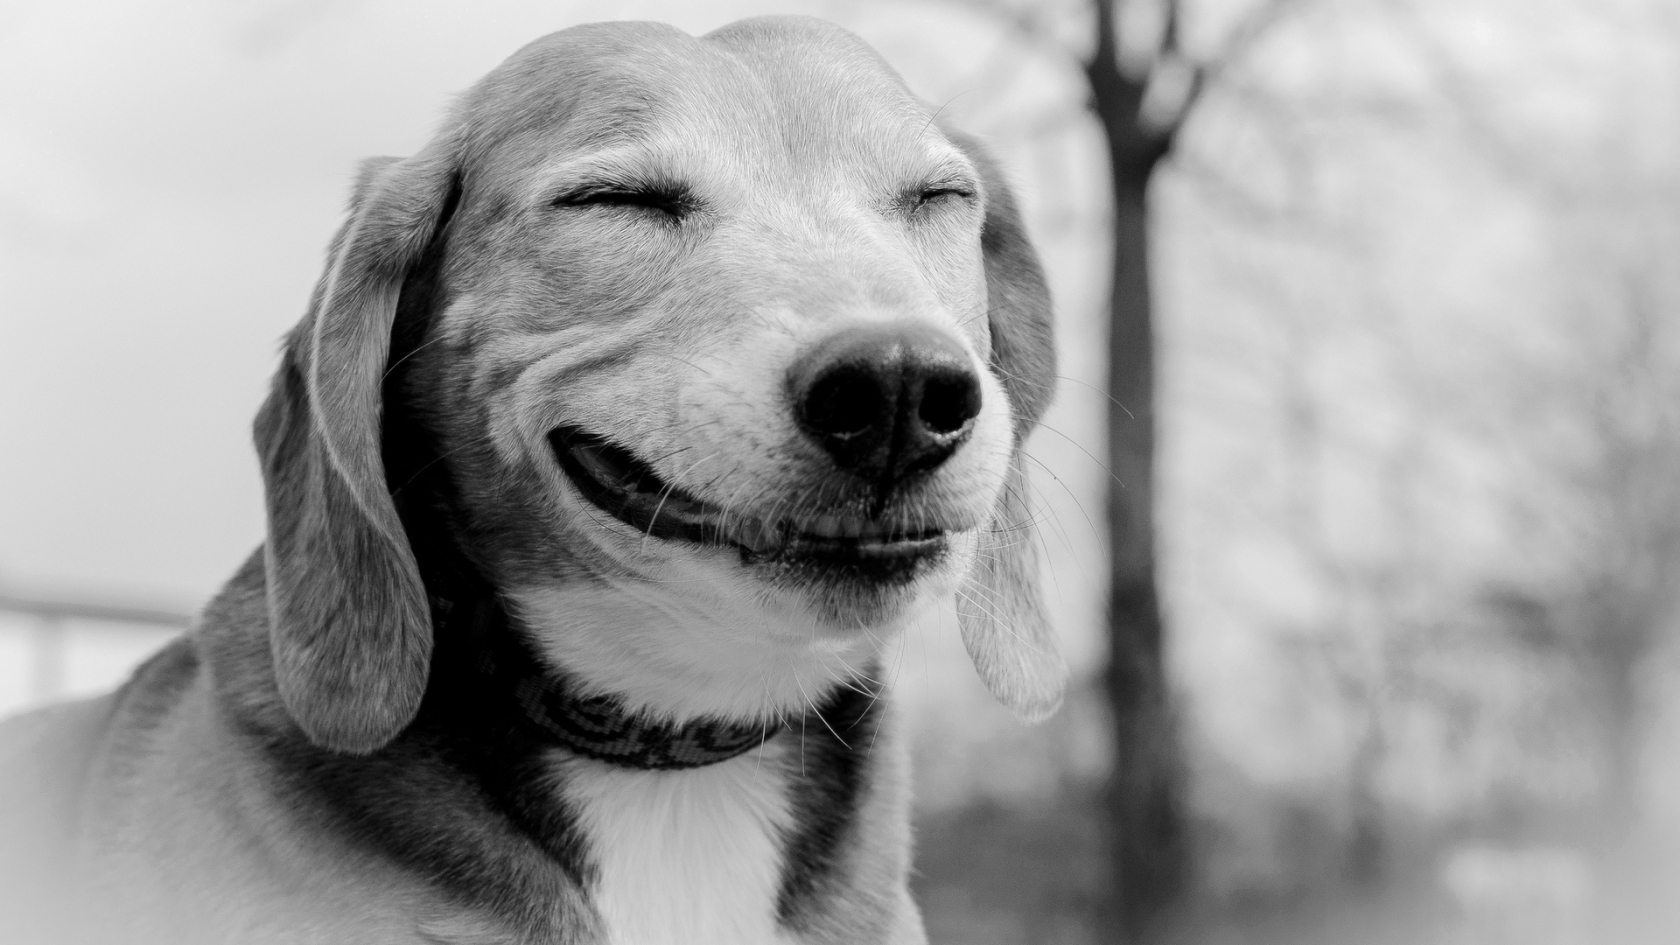 Smiling Dog for 1680 x 945 HDTV resolution